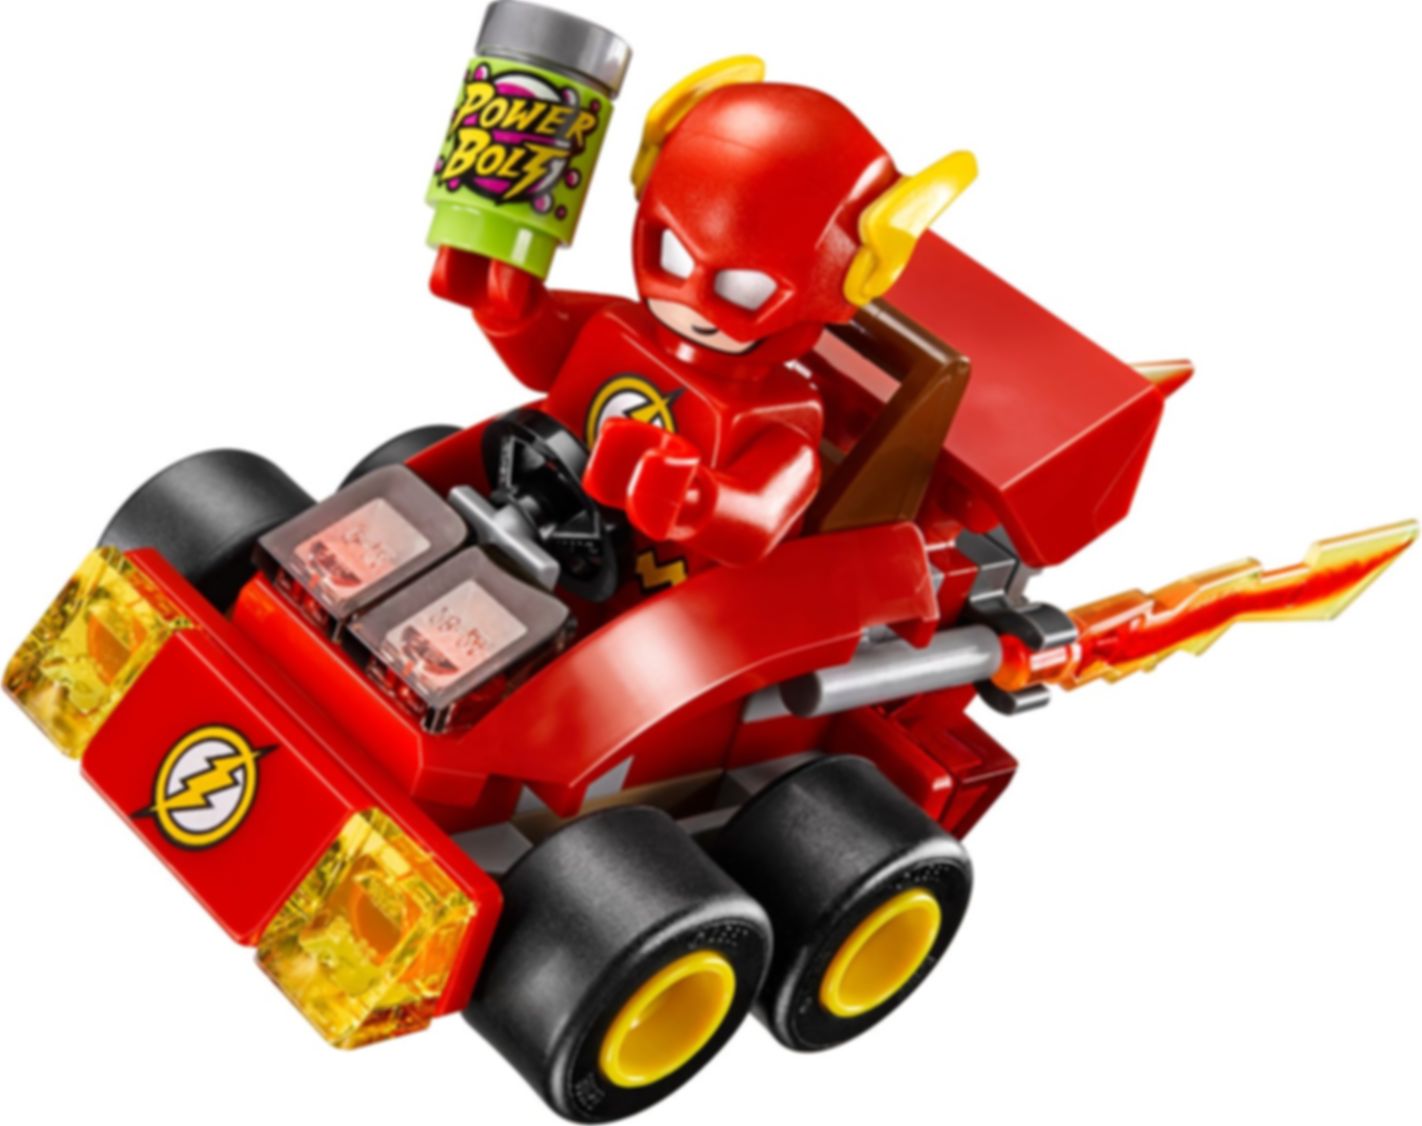 LEGO® DC Superheroes LEGO Super Heroes 76063 - Mighty Micros: The Flash vs. Captain Cold spielablauf